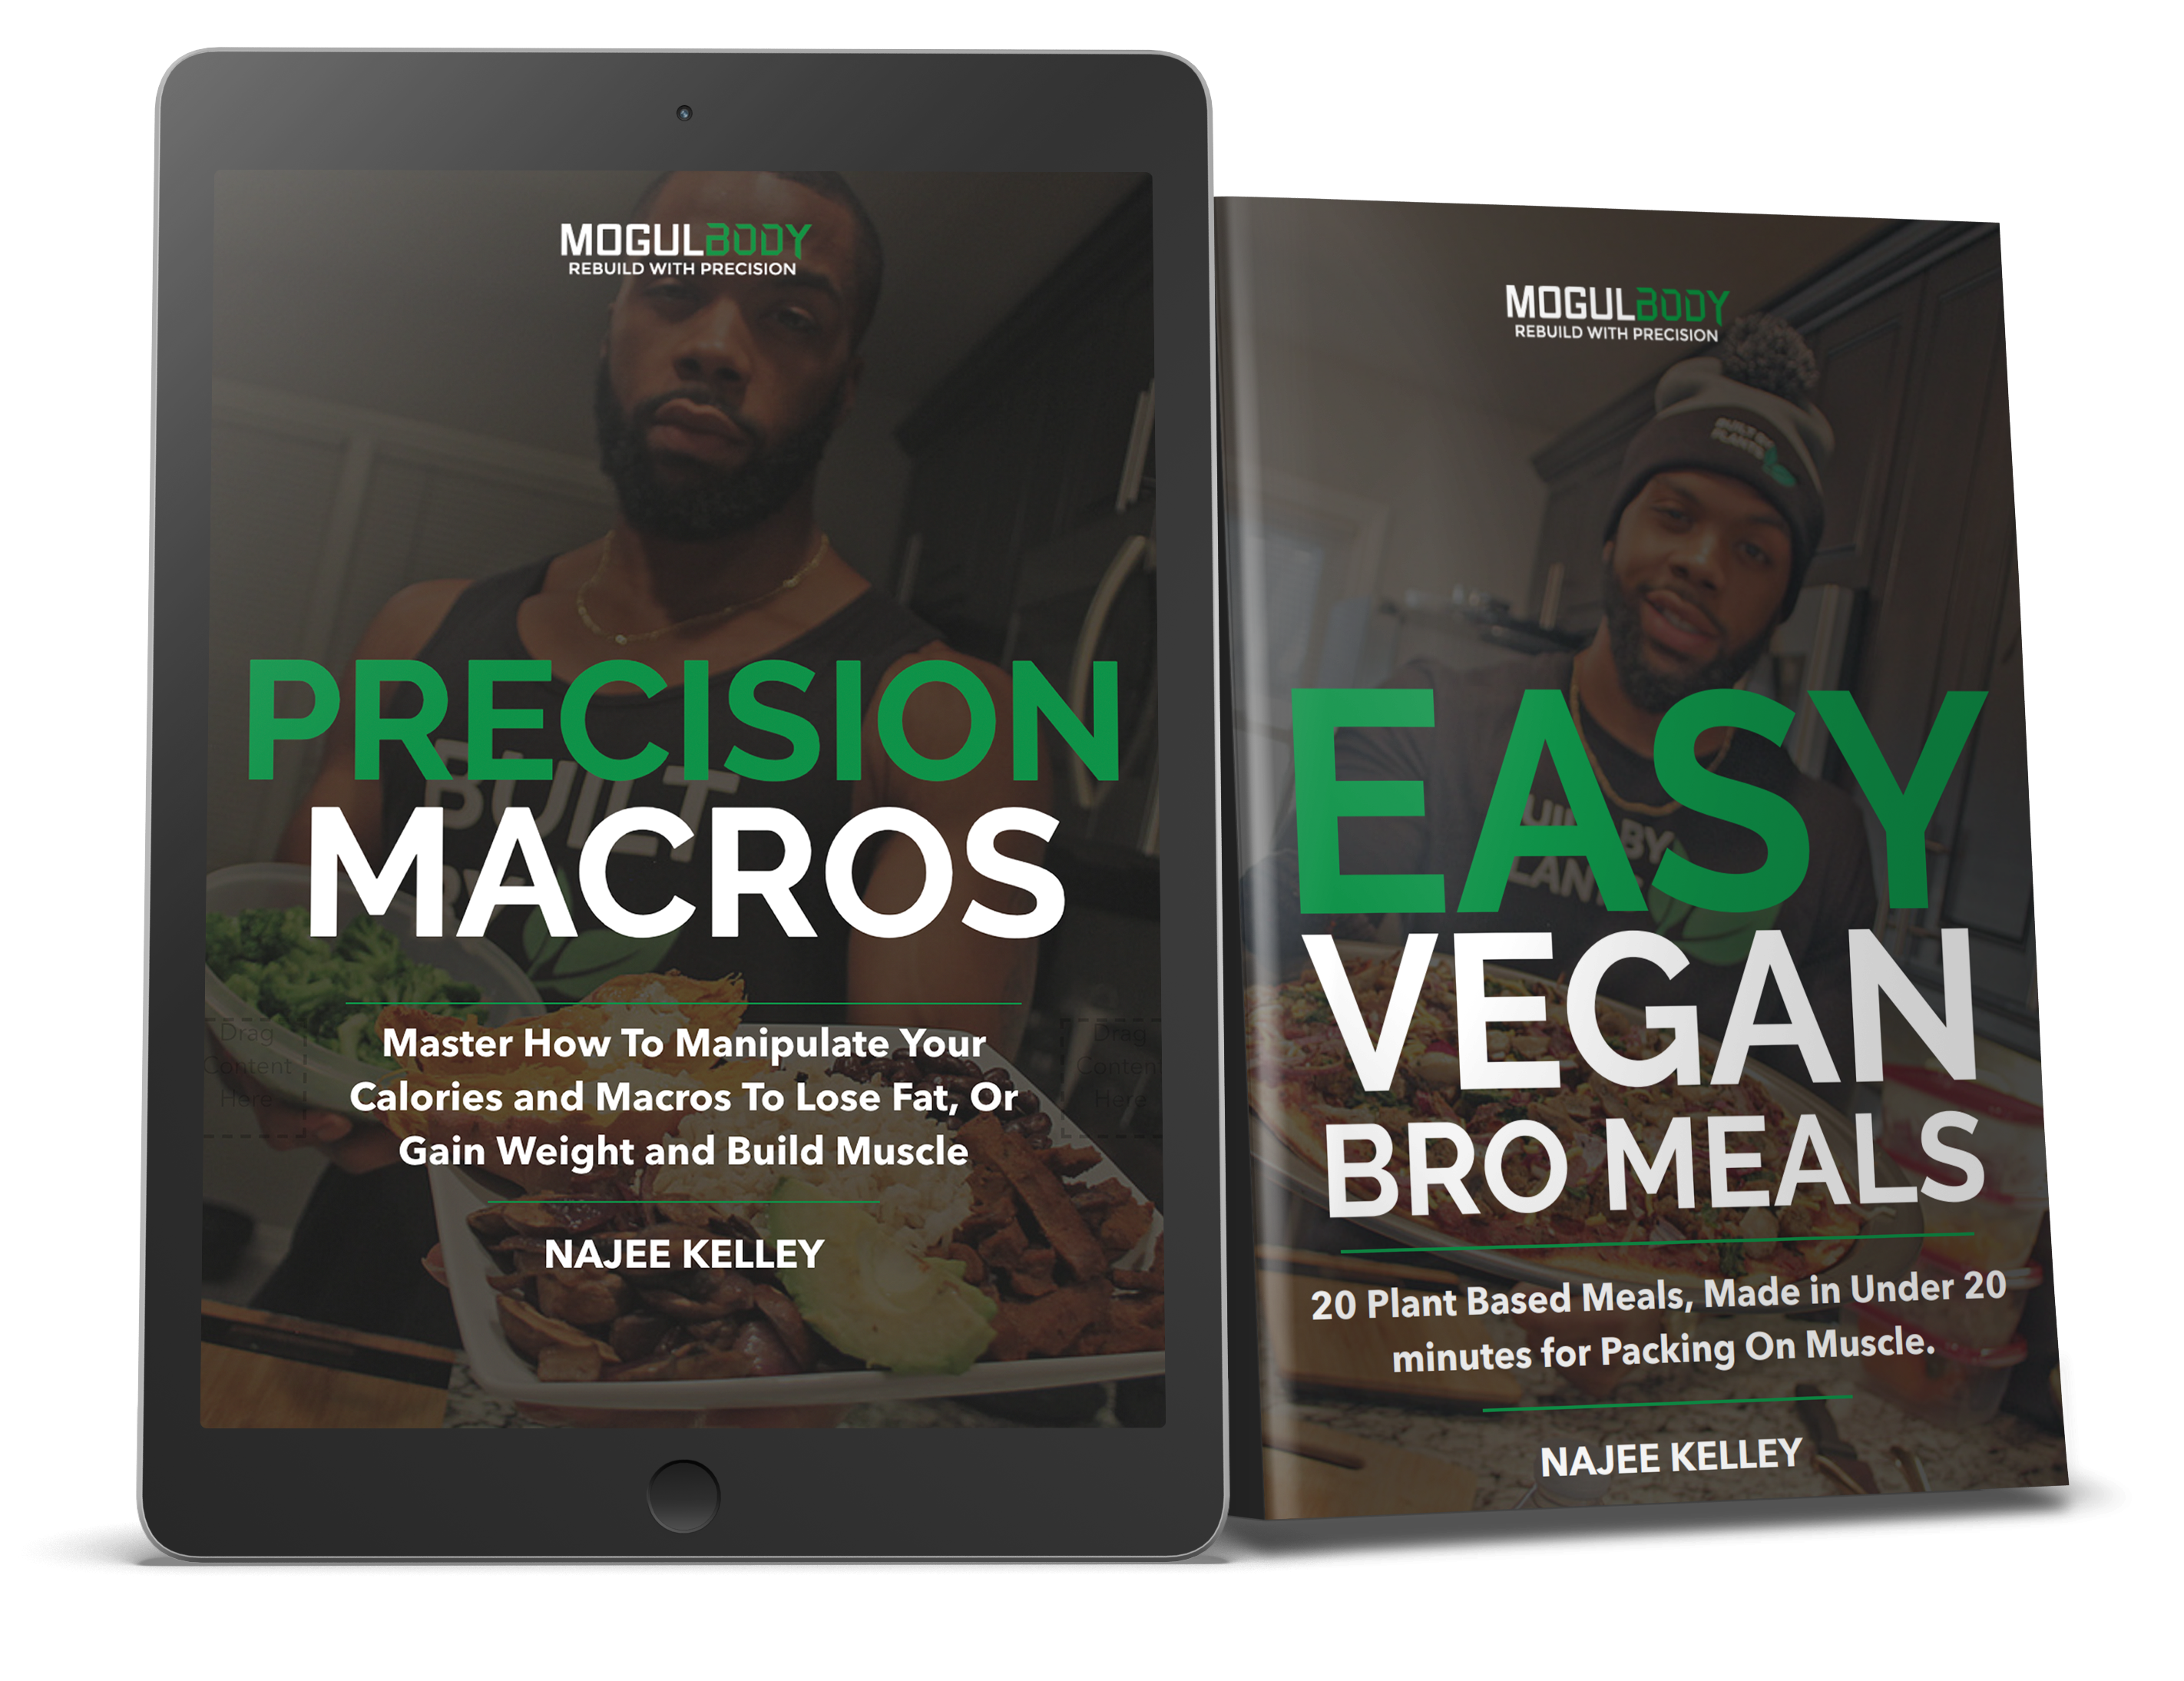 Precision Macros and Vegan Bro Meals